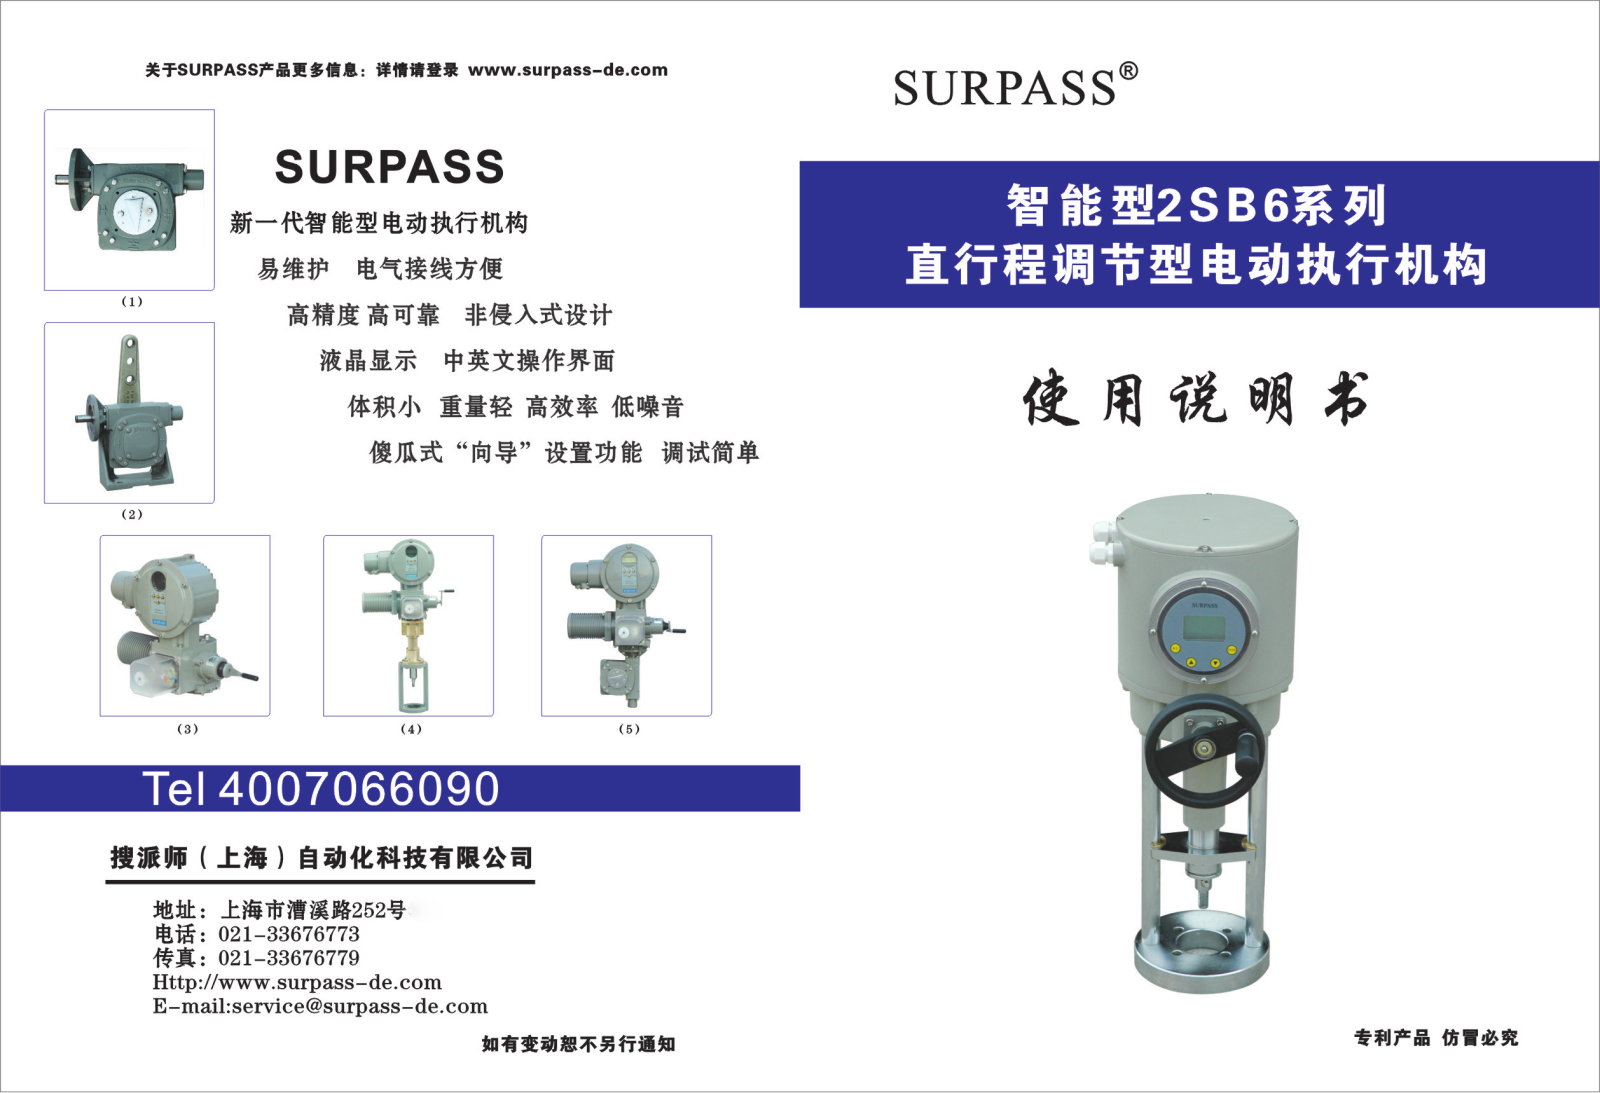 SURPASS 2SB6 User Manual